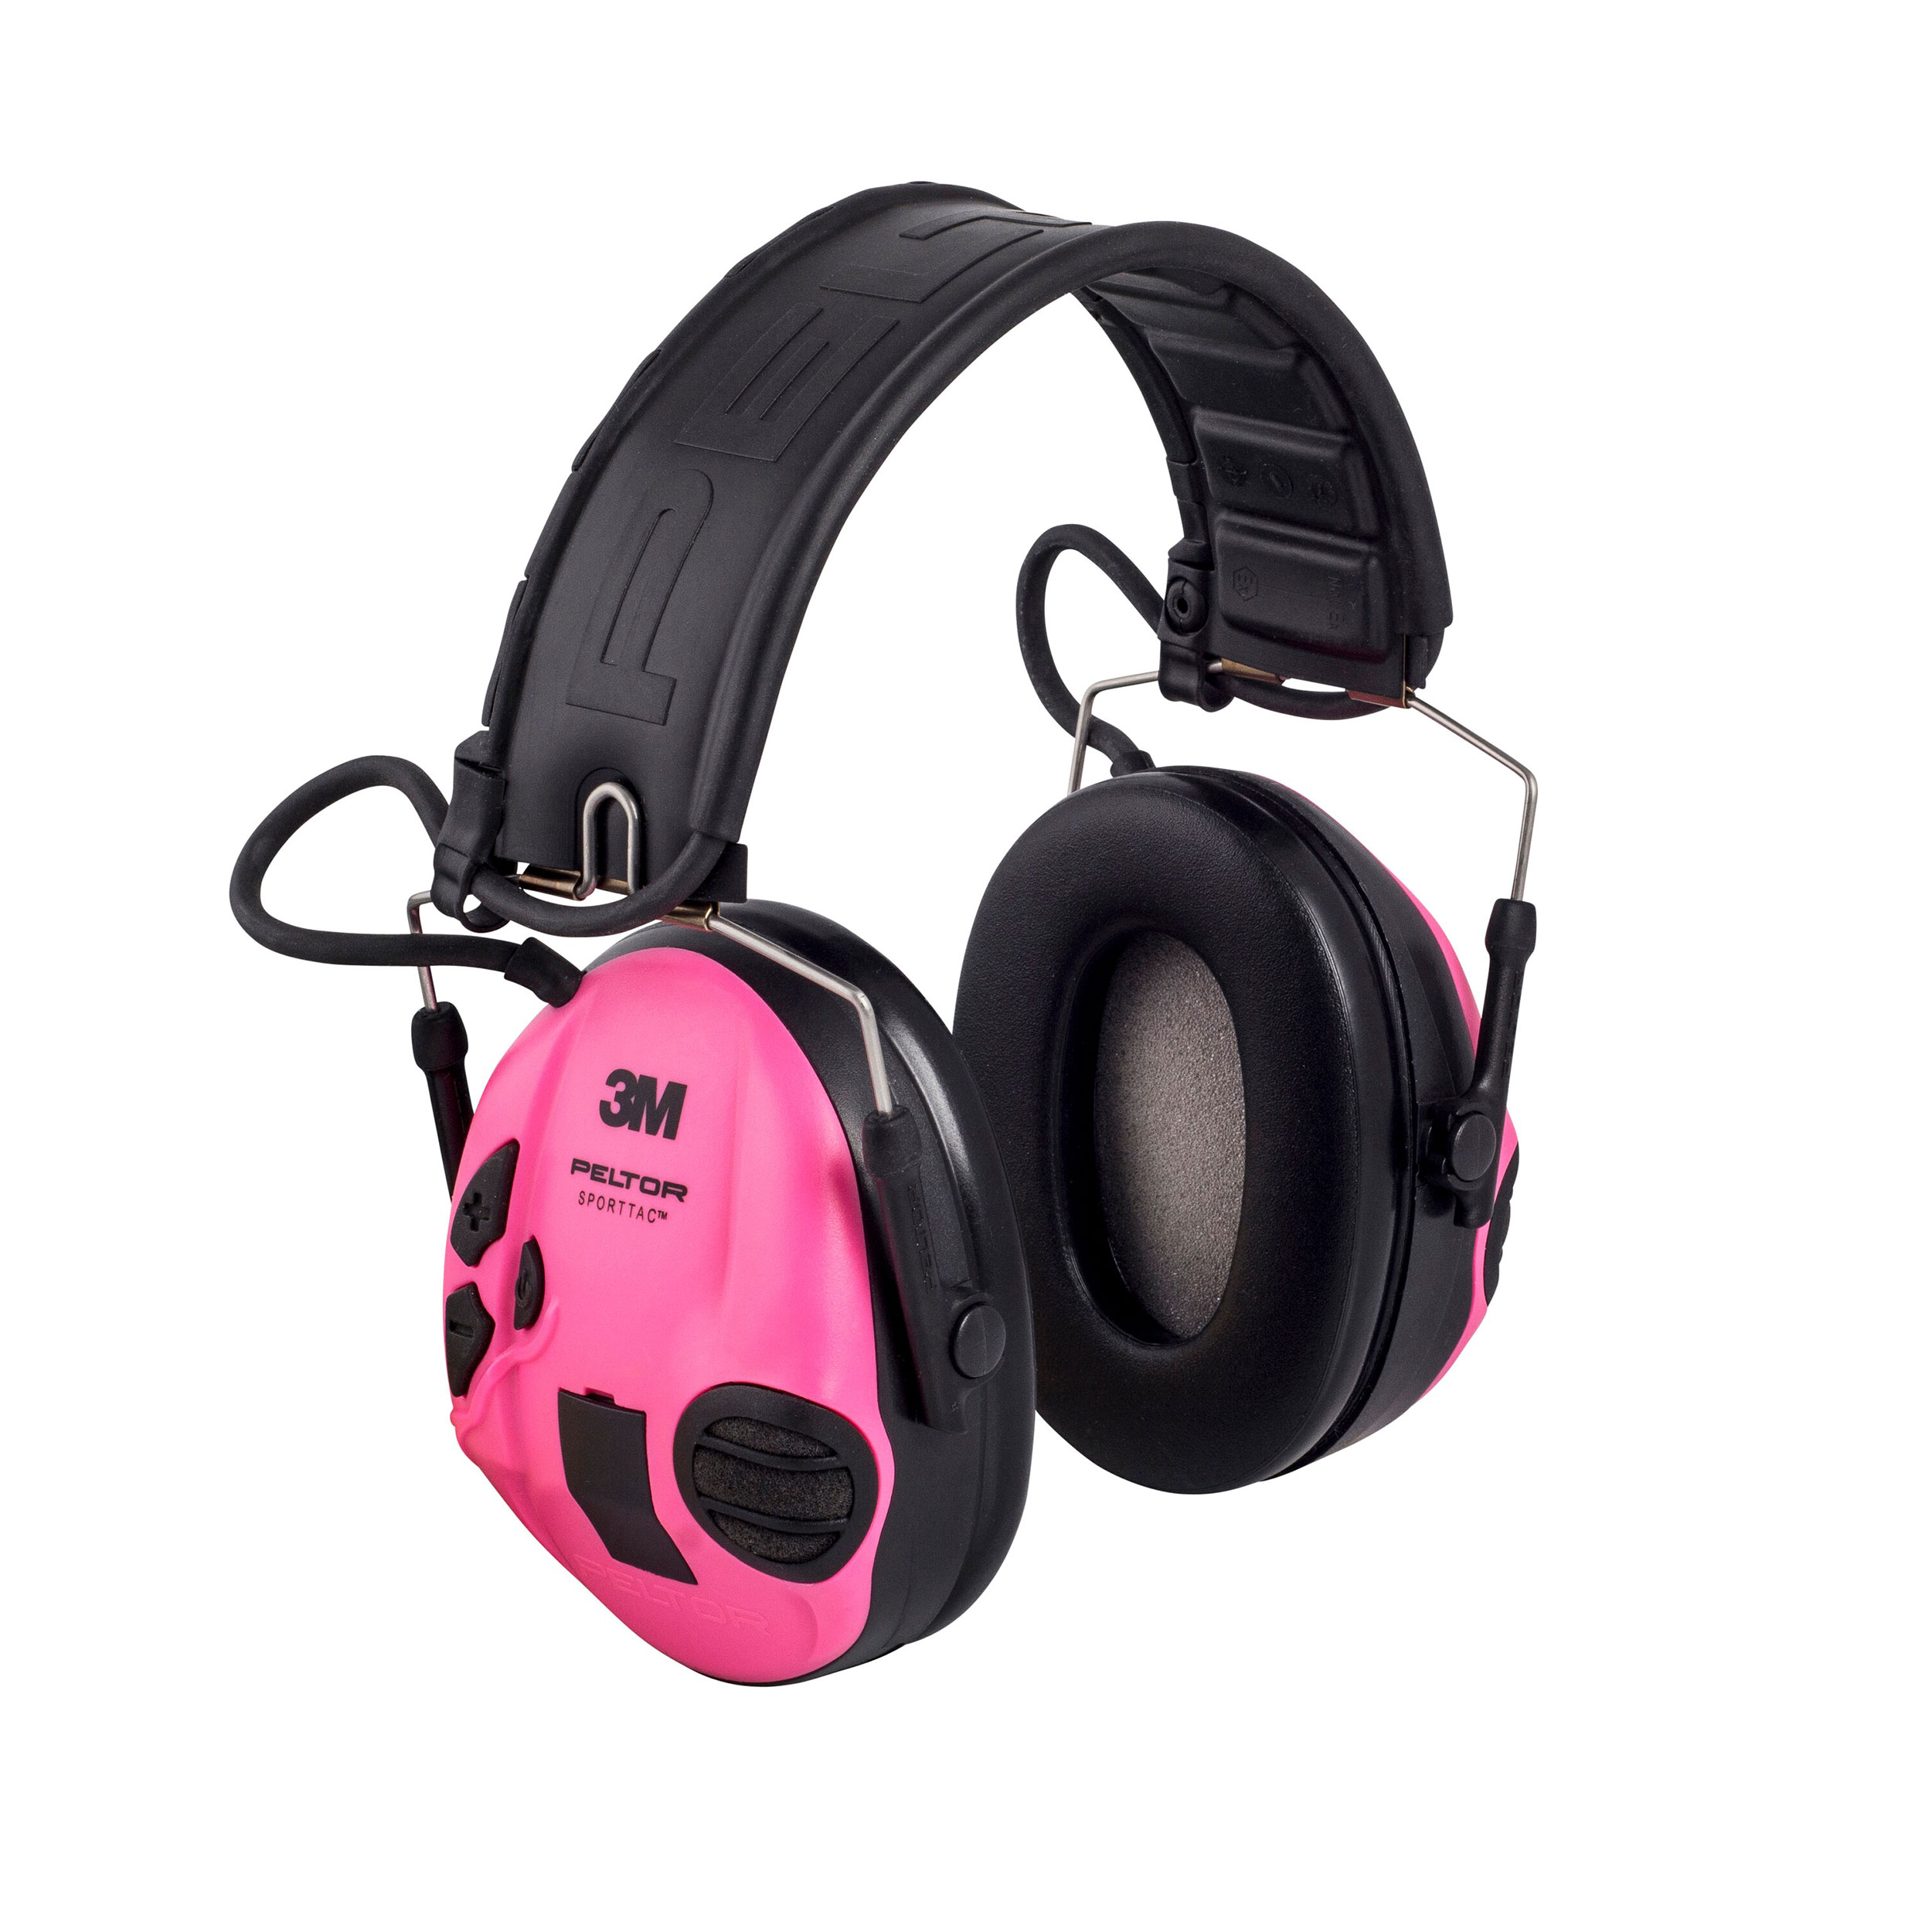 3M PELTOR SportTac Hunting, aktiver Kapselgehörschutz mit klappbarem Kopfbügel, MT16H210F-478-RE, 2 Paar Wechselschalen pink + dunkelgrün